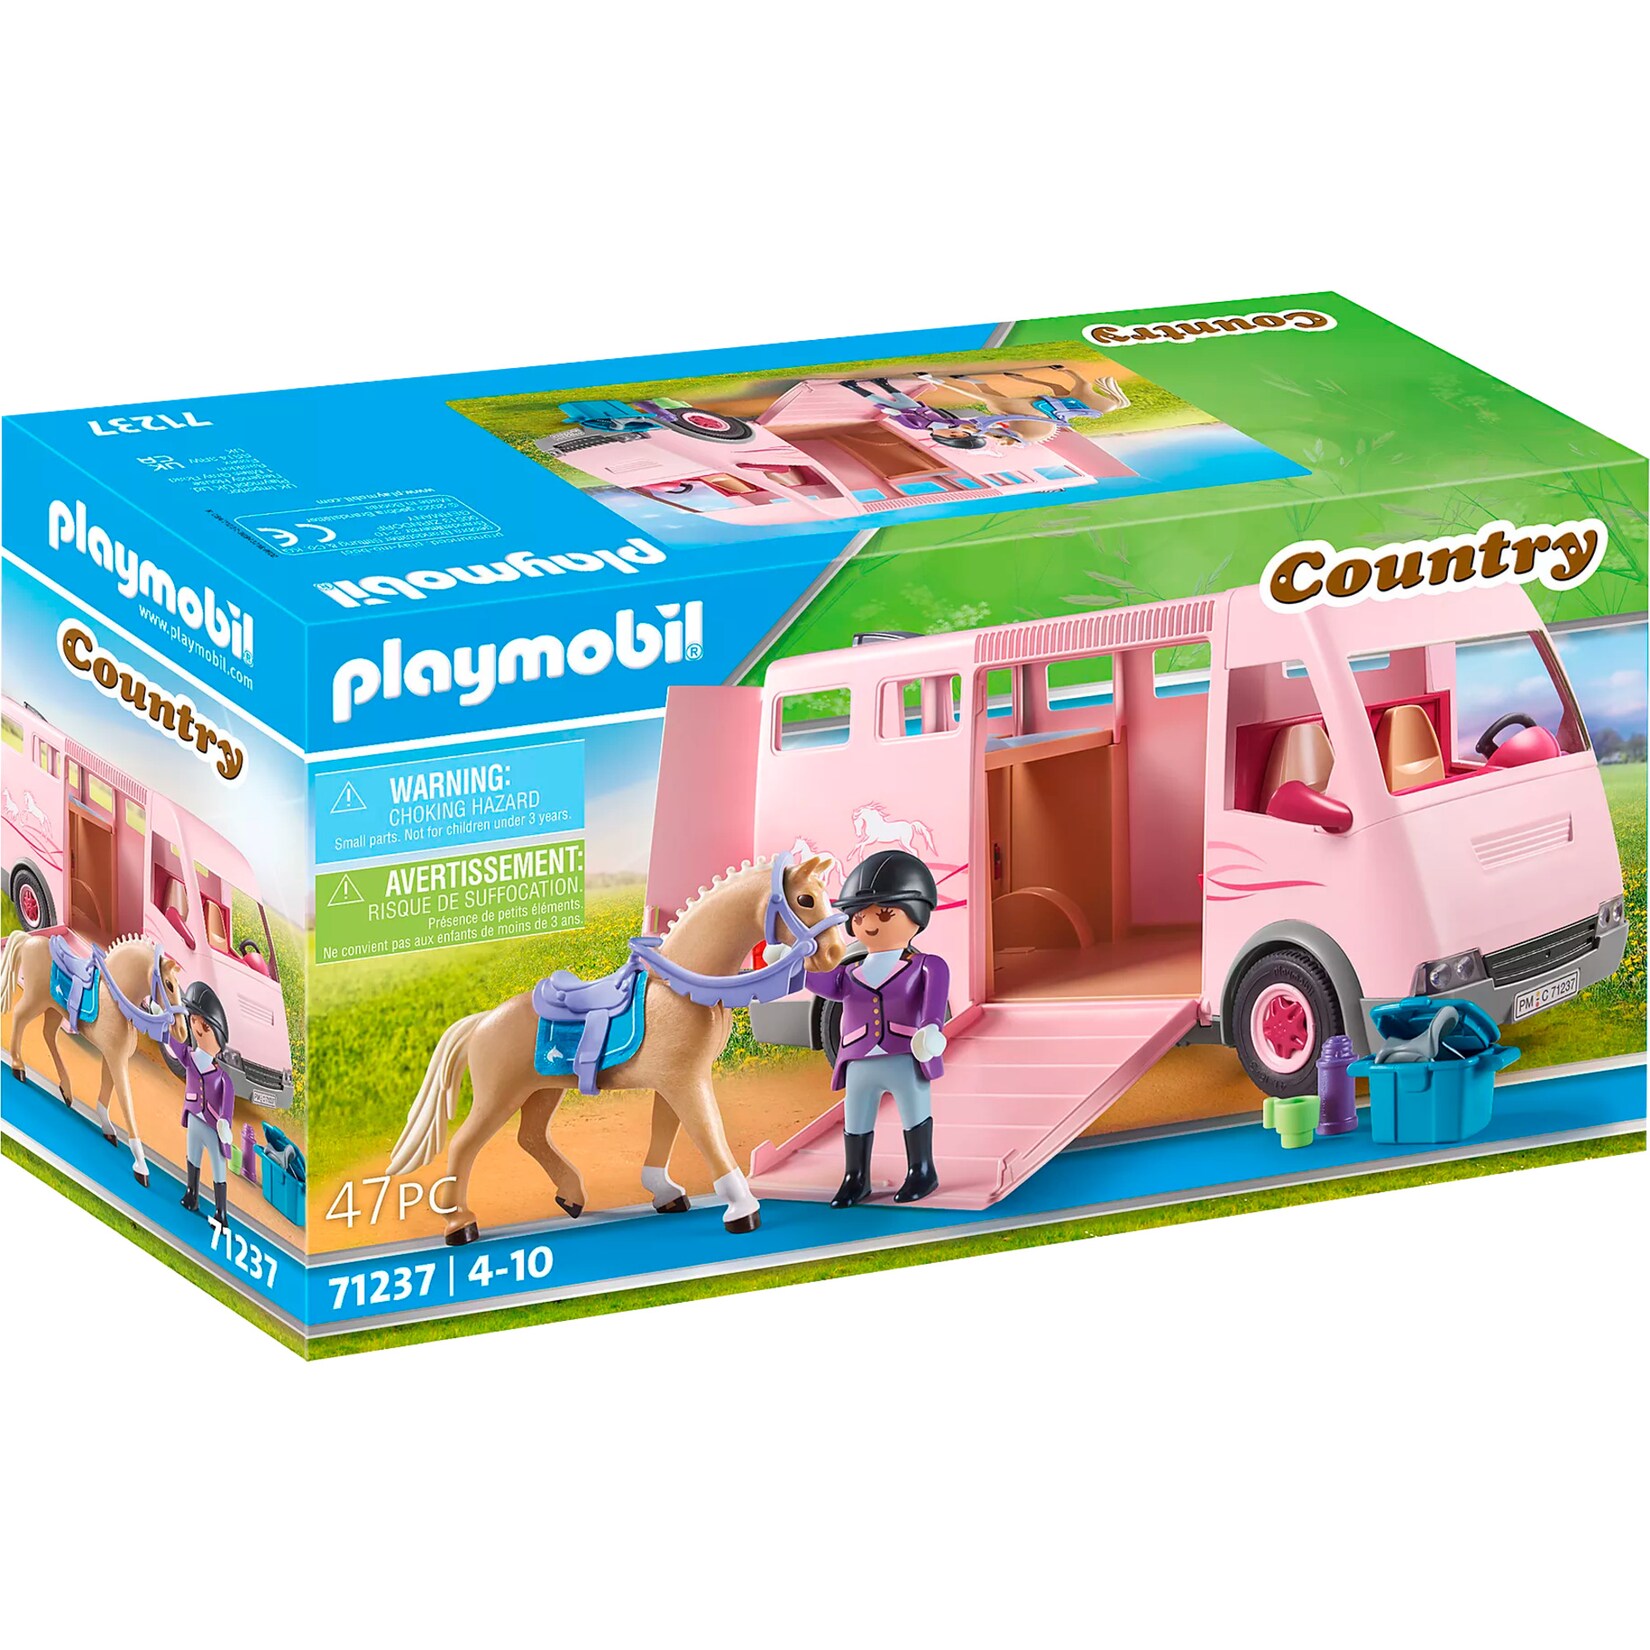 PLAYMOBIL Konstruktionsspielzeug Pferdetransporter